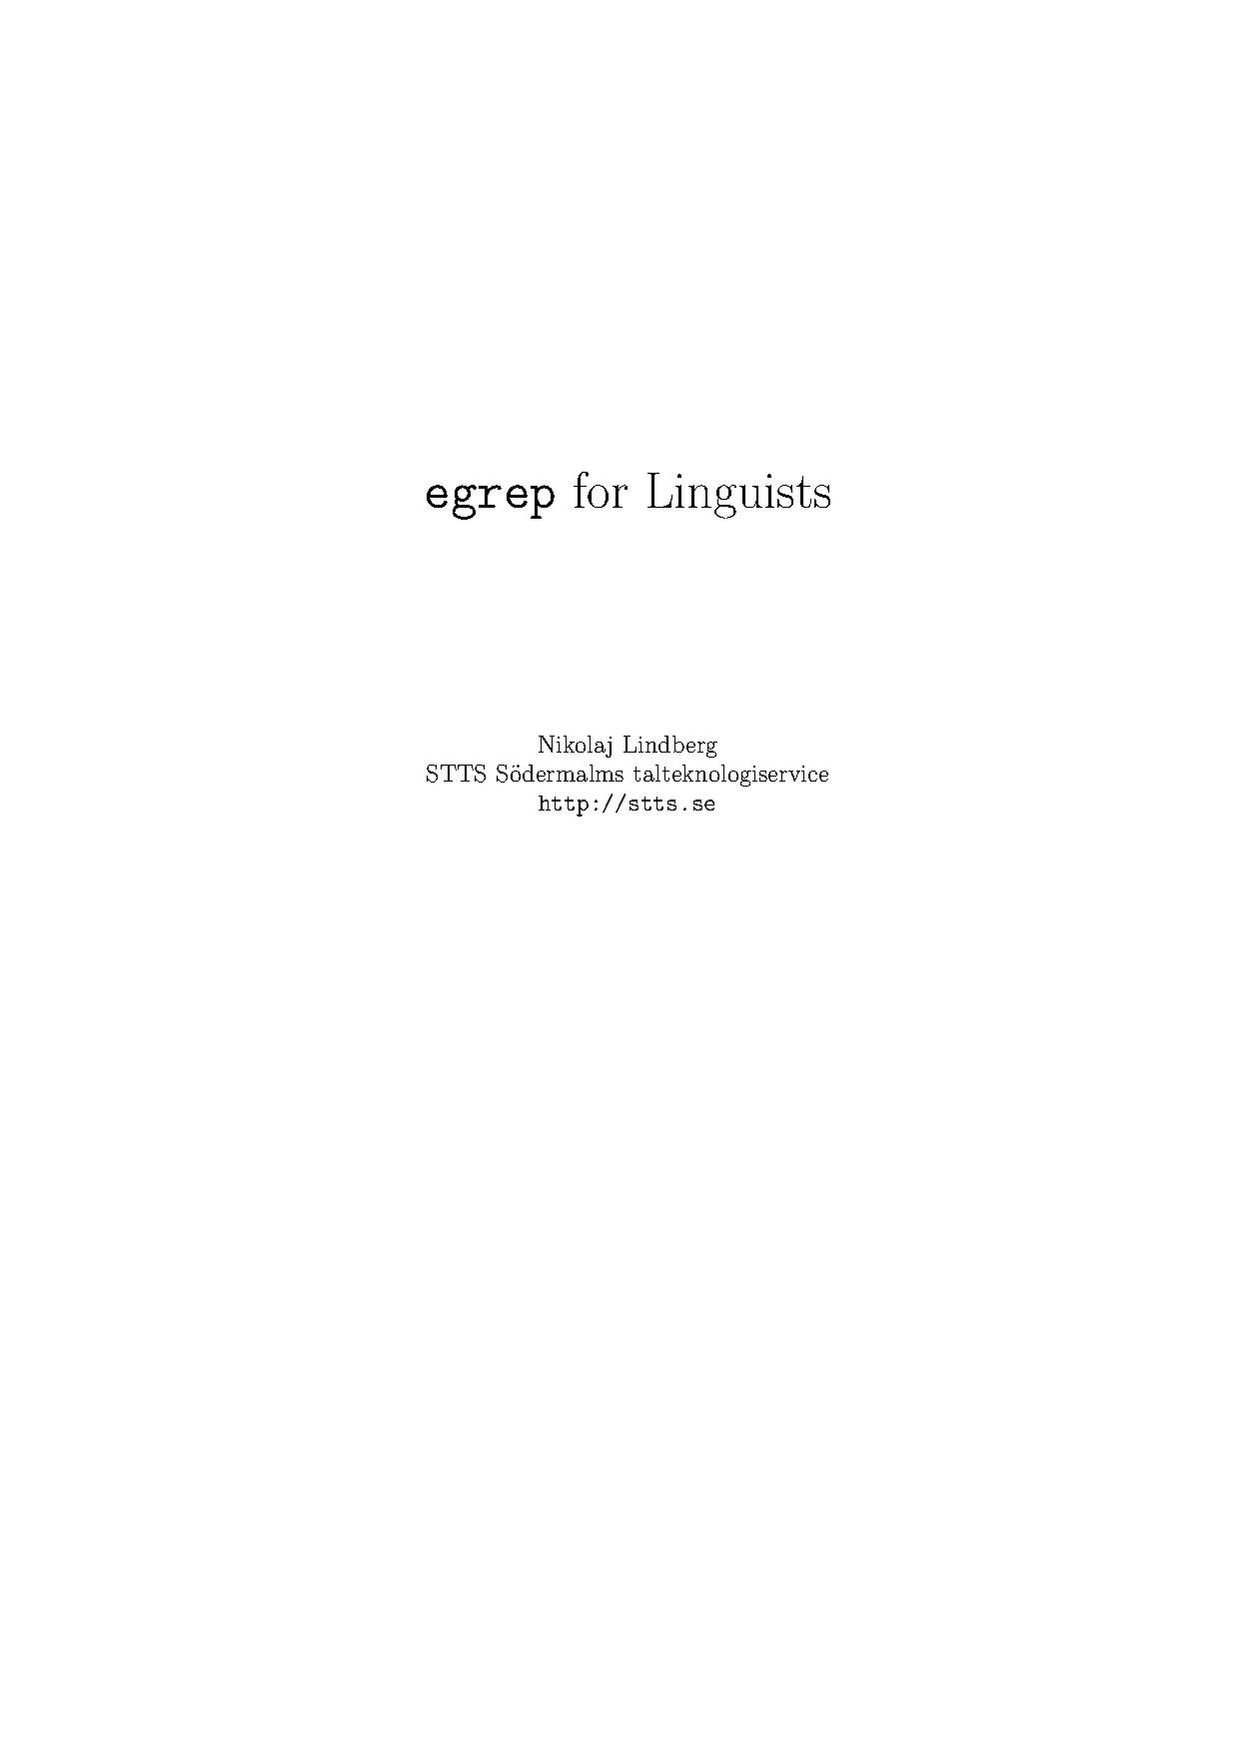 egrep_for_linguists.pdf